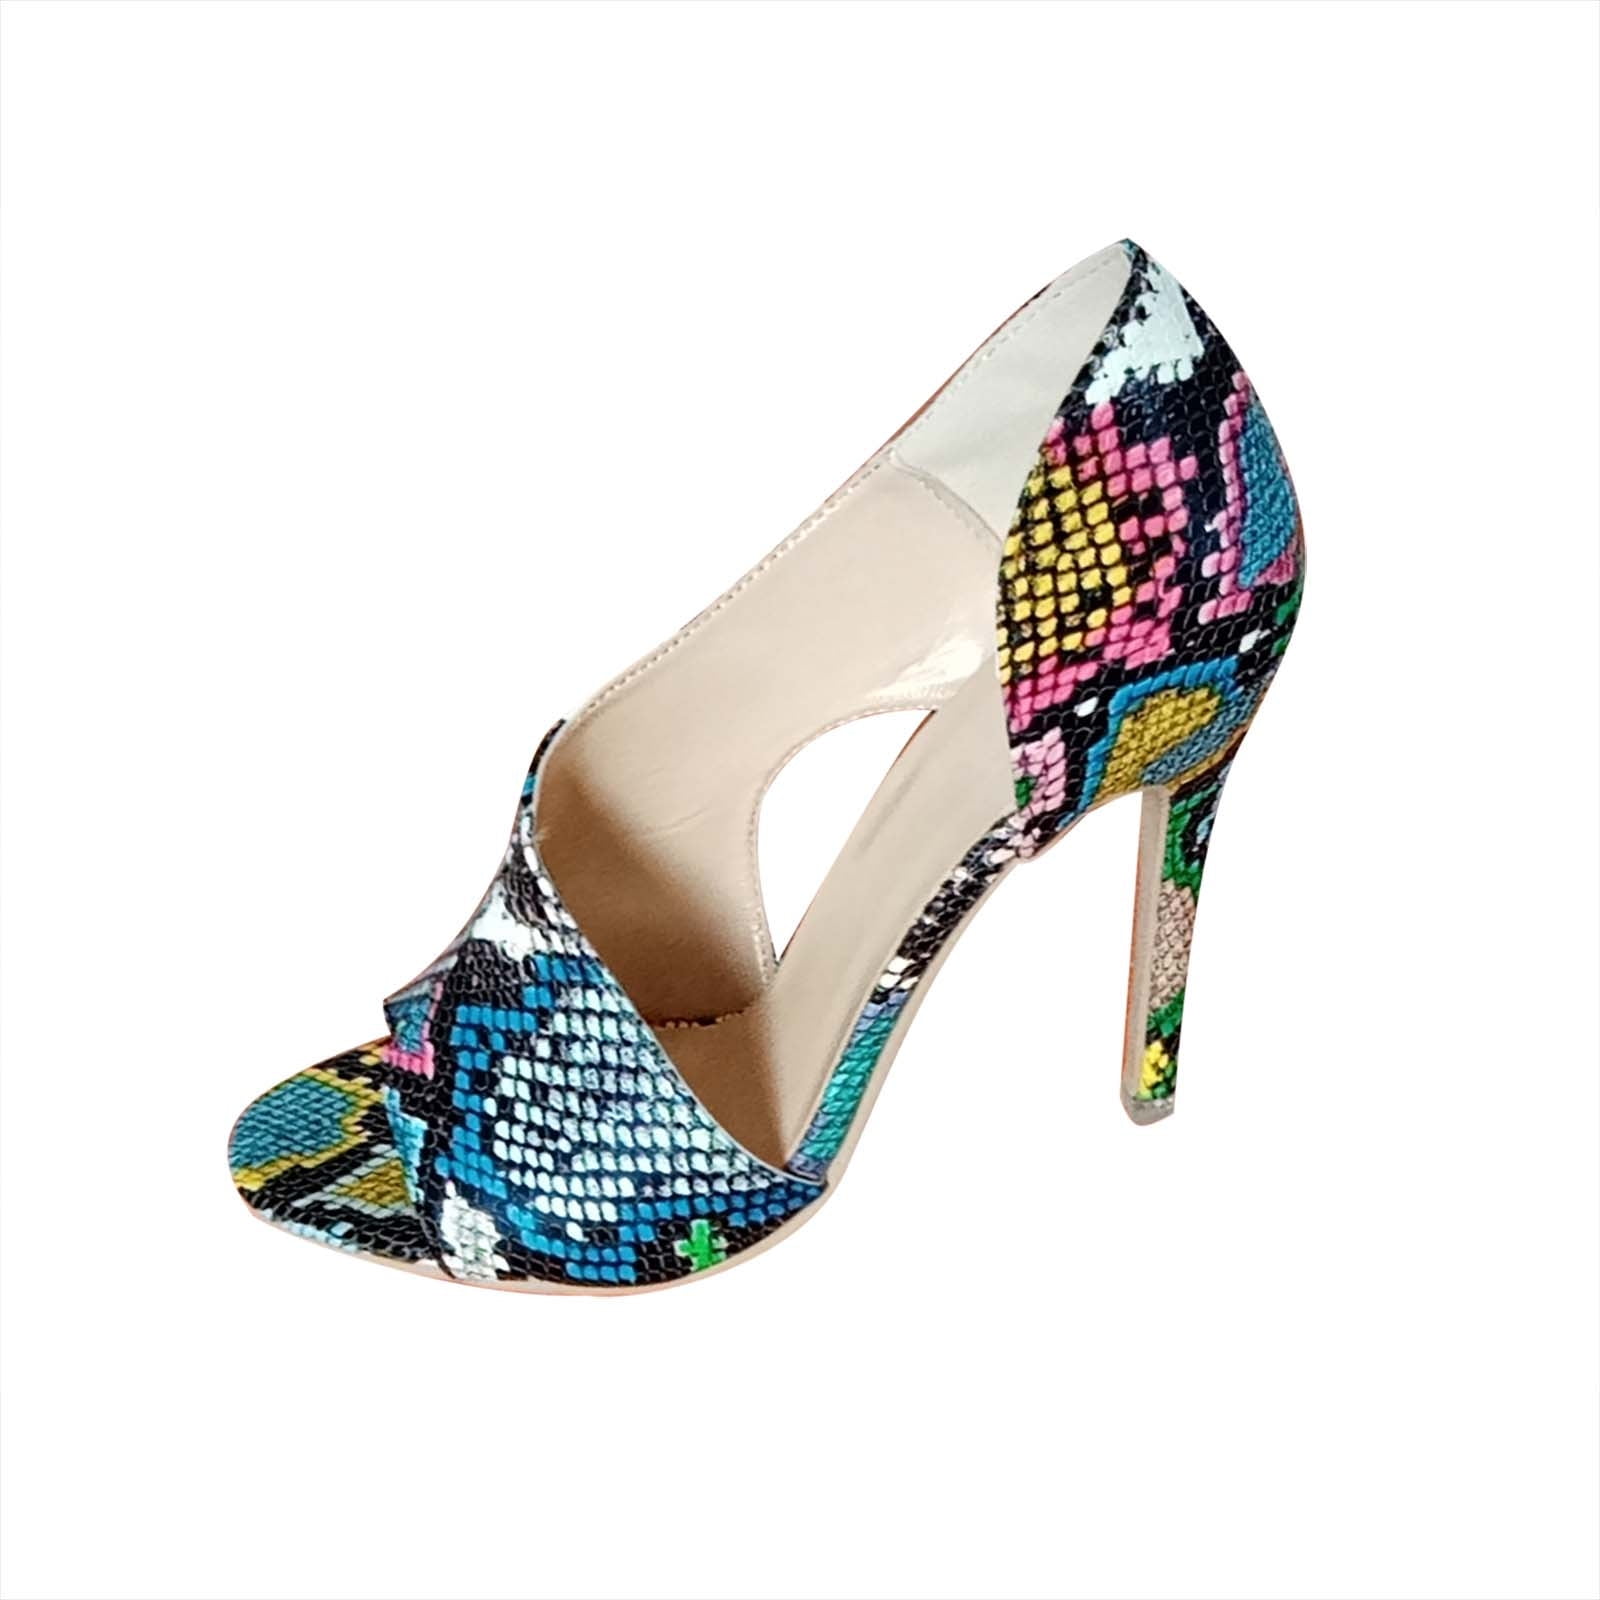 Zara Brown/Multicolor Snake Print Platform Strap Sandal Heel Size 38 | eBay